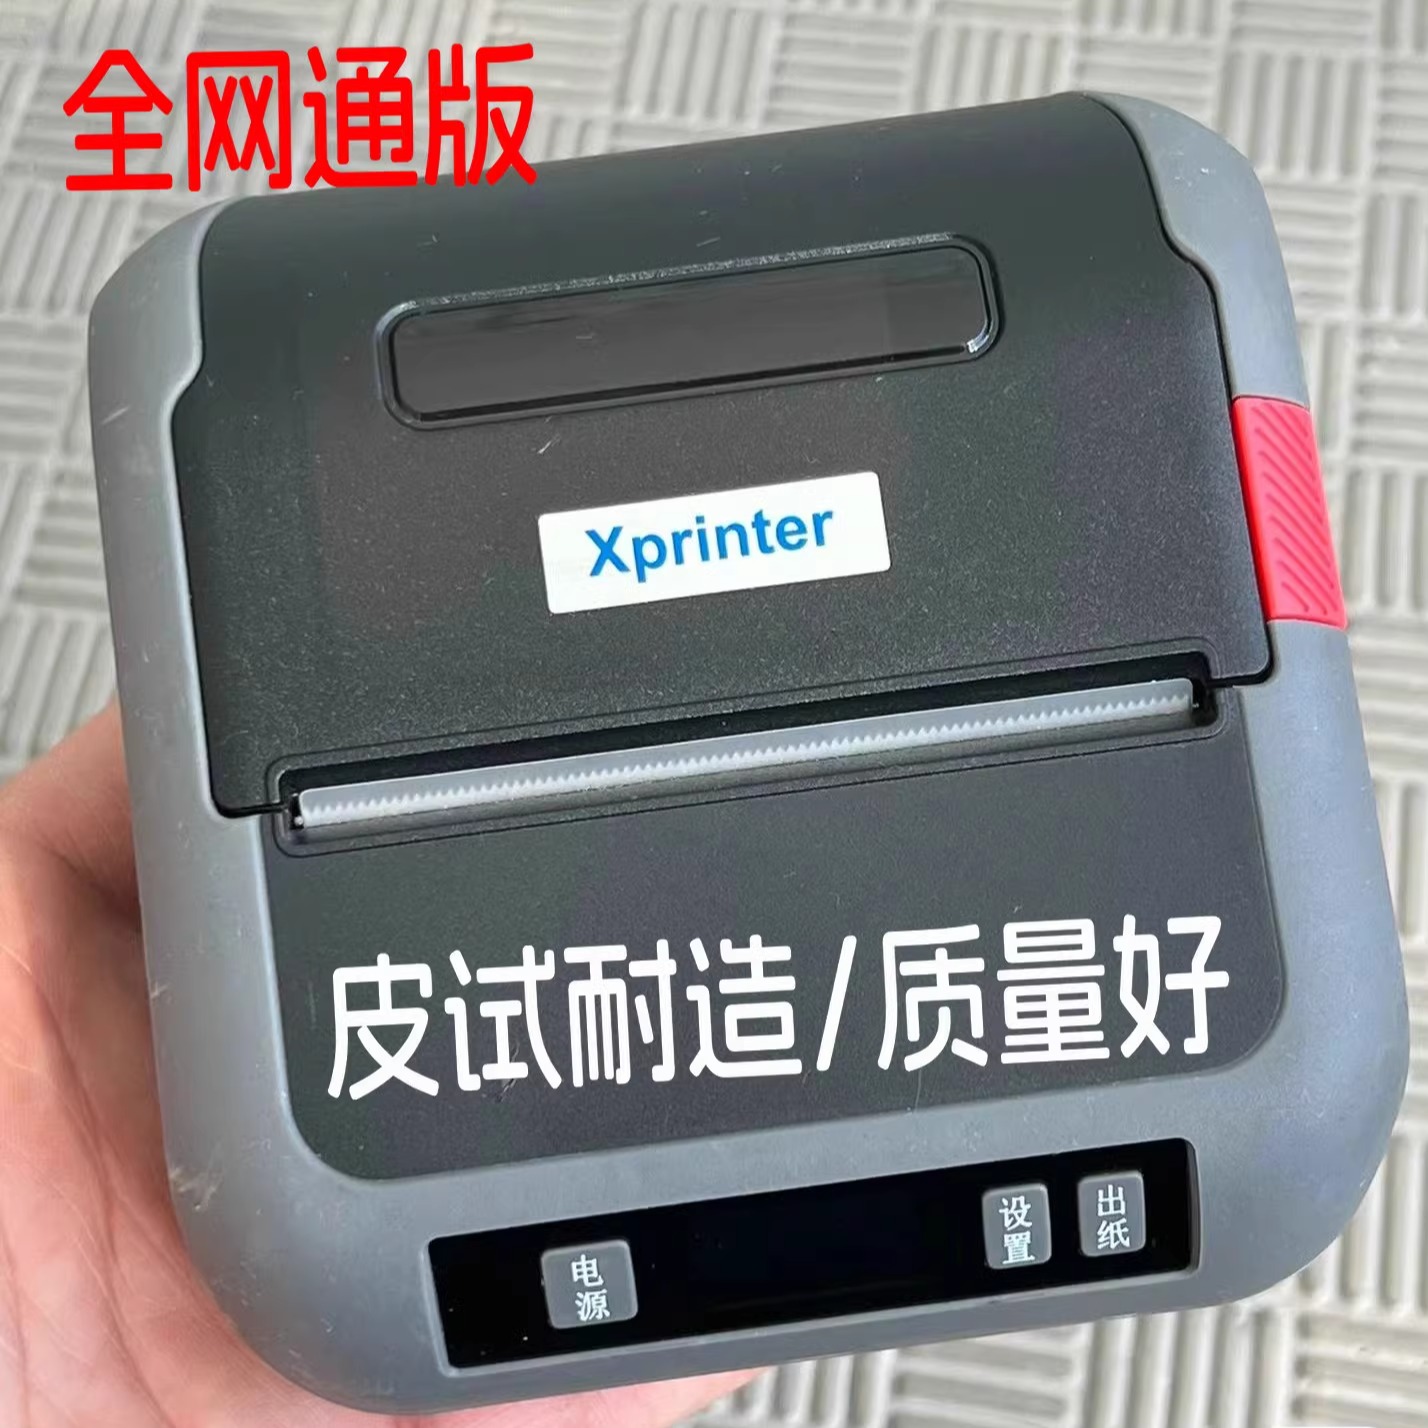 xprinter芯烨蓝牙便携式条码打印机xp-p323b菜鸟驿站通用版p3302b